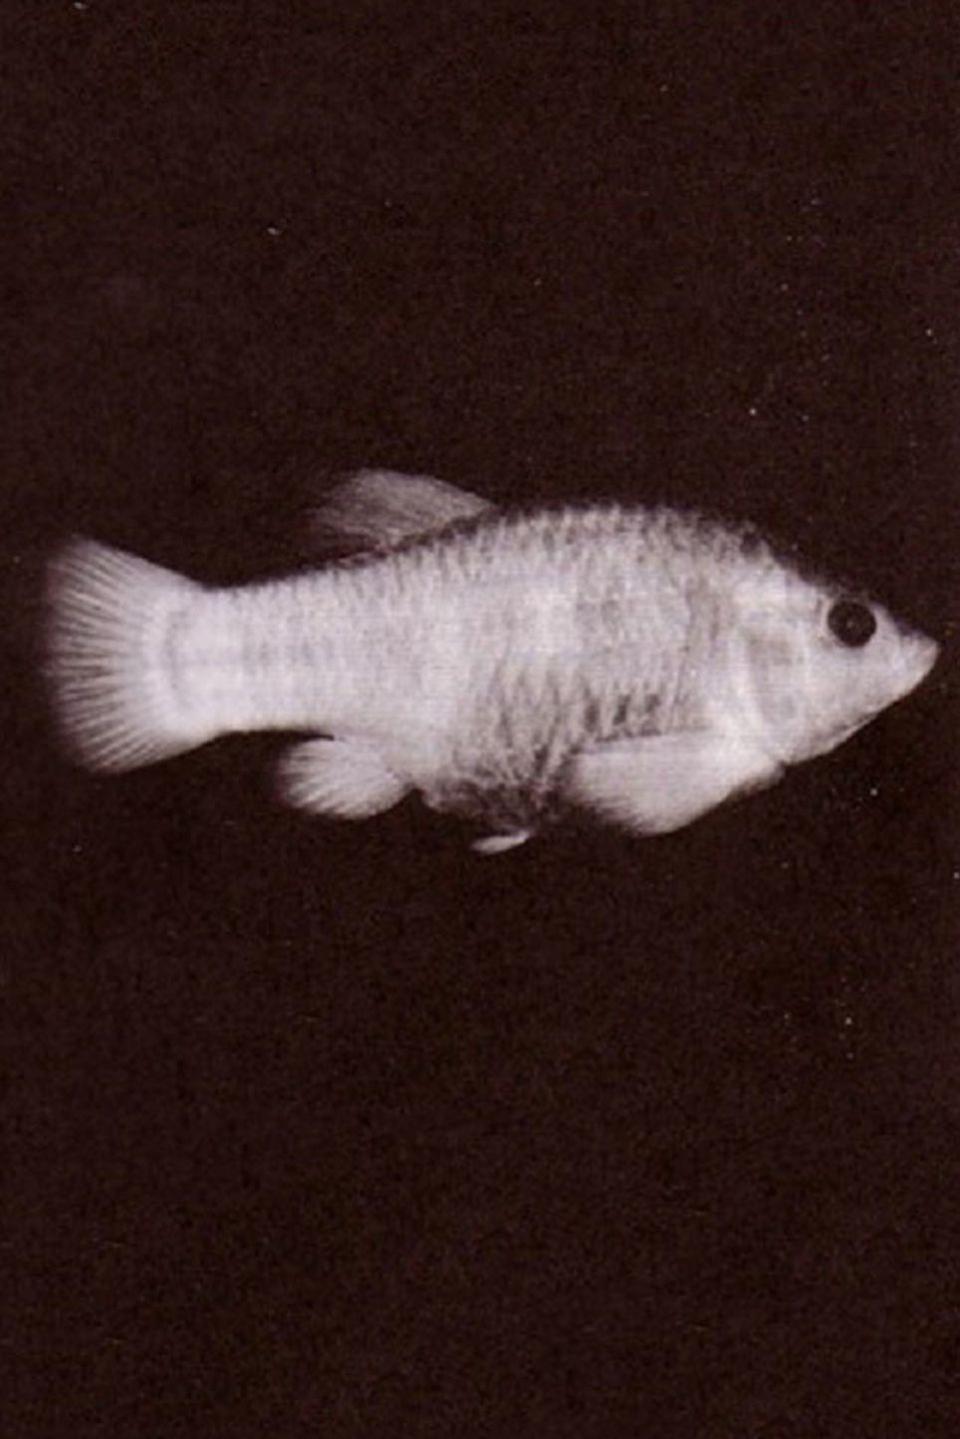 Tecopa Pupfish